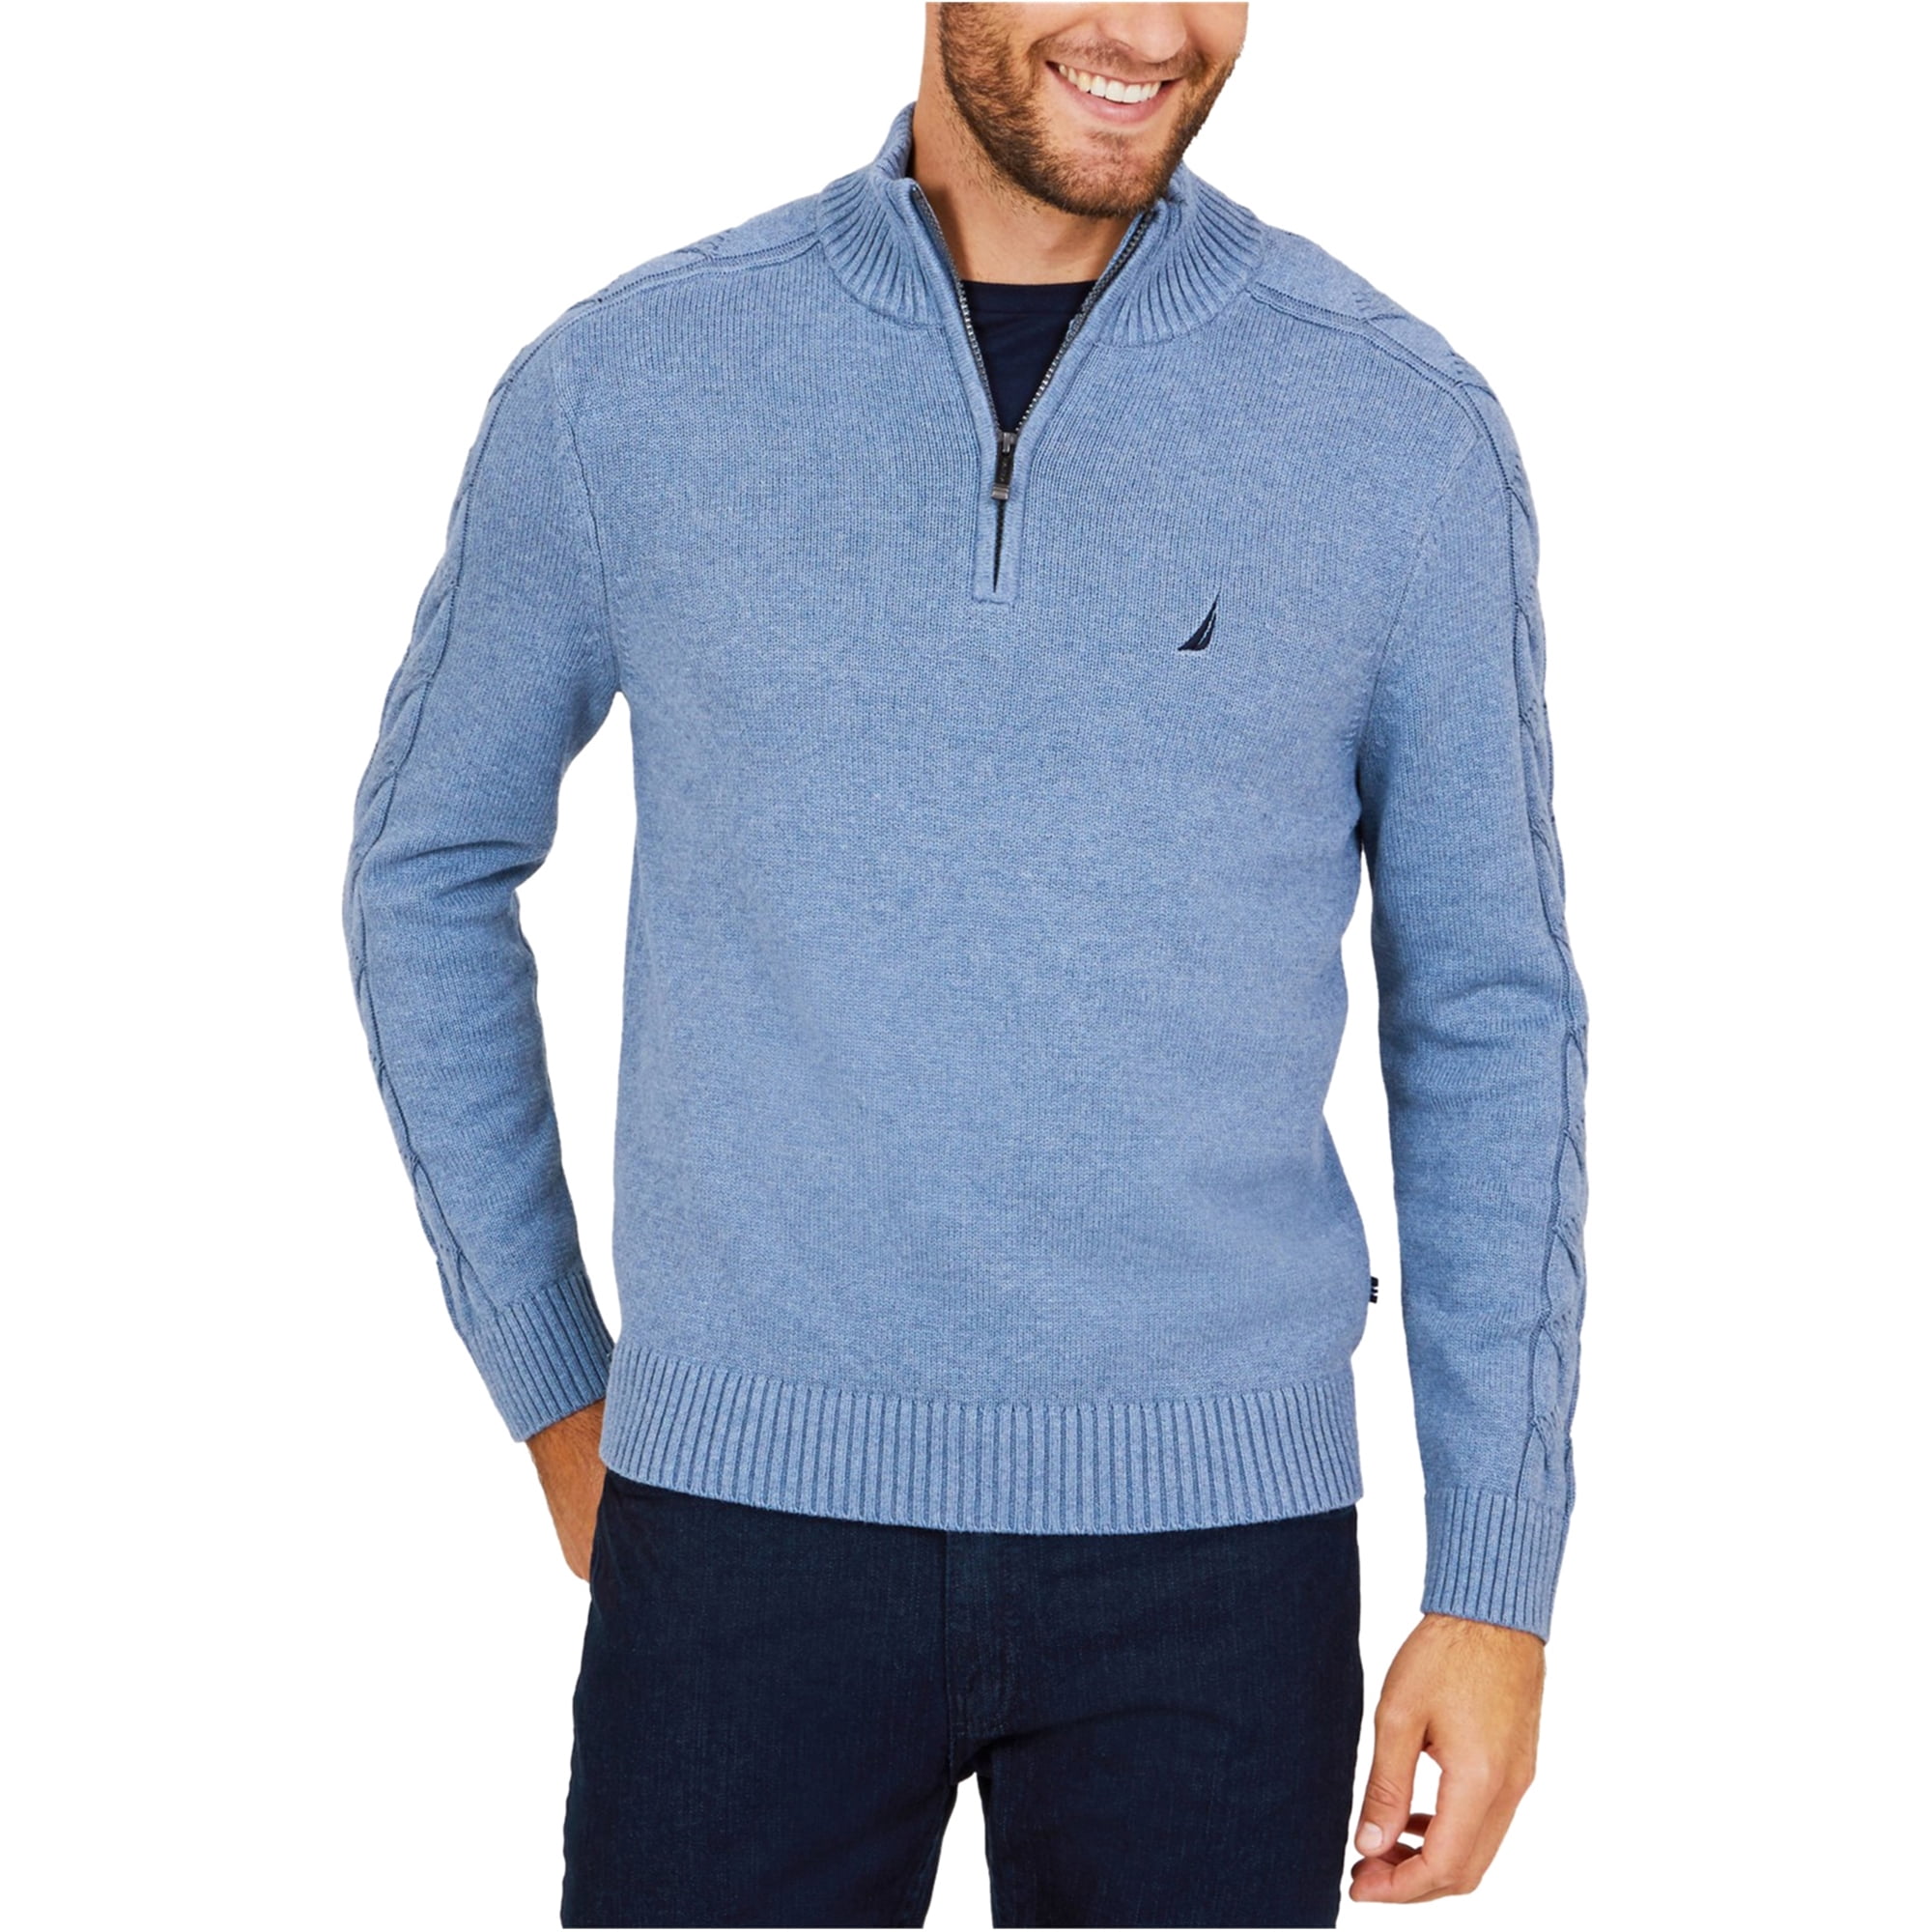 Nautica - Nautica Mens Cable Sleeve Pullover Sweater - Walmart.com ...